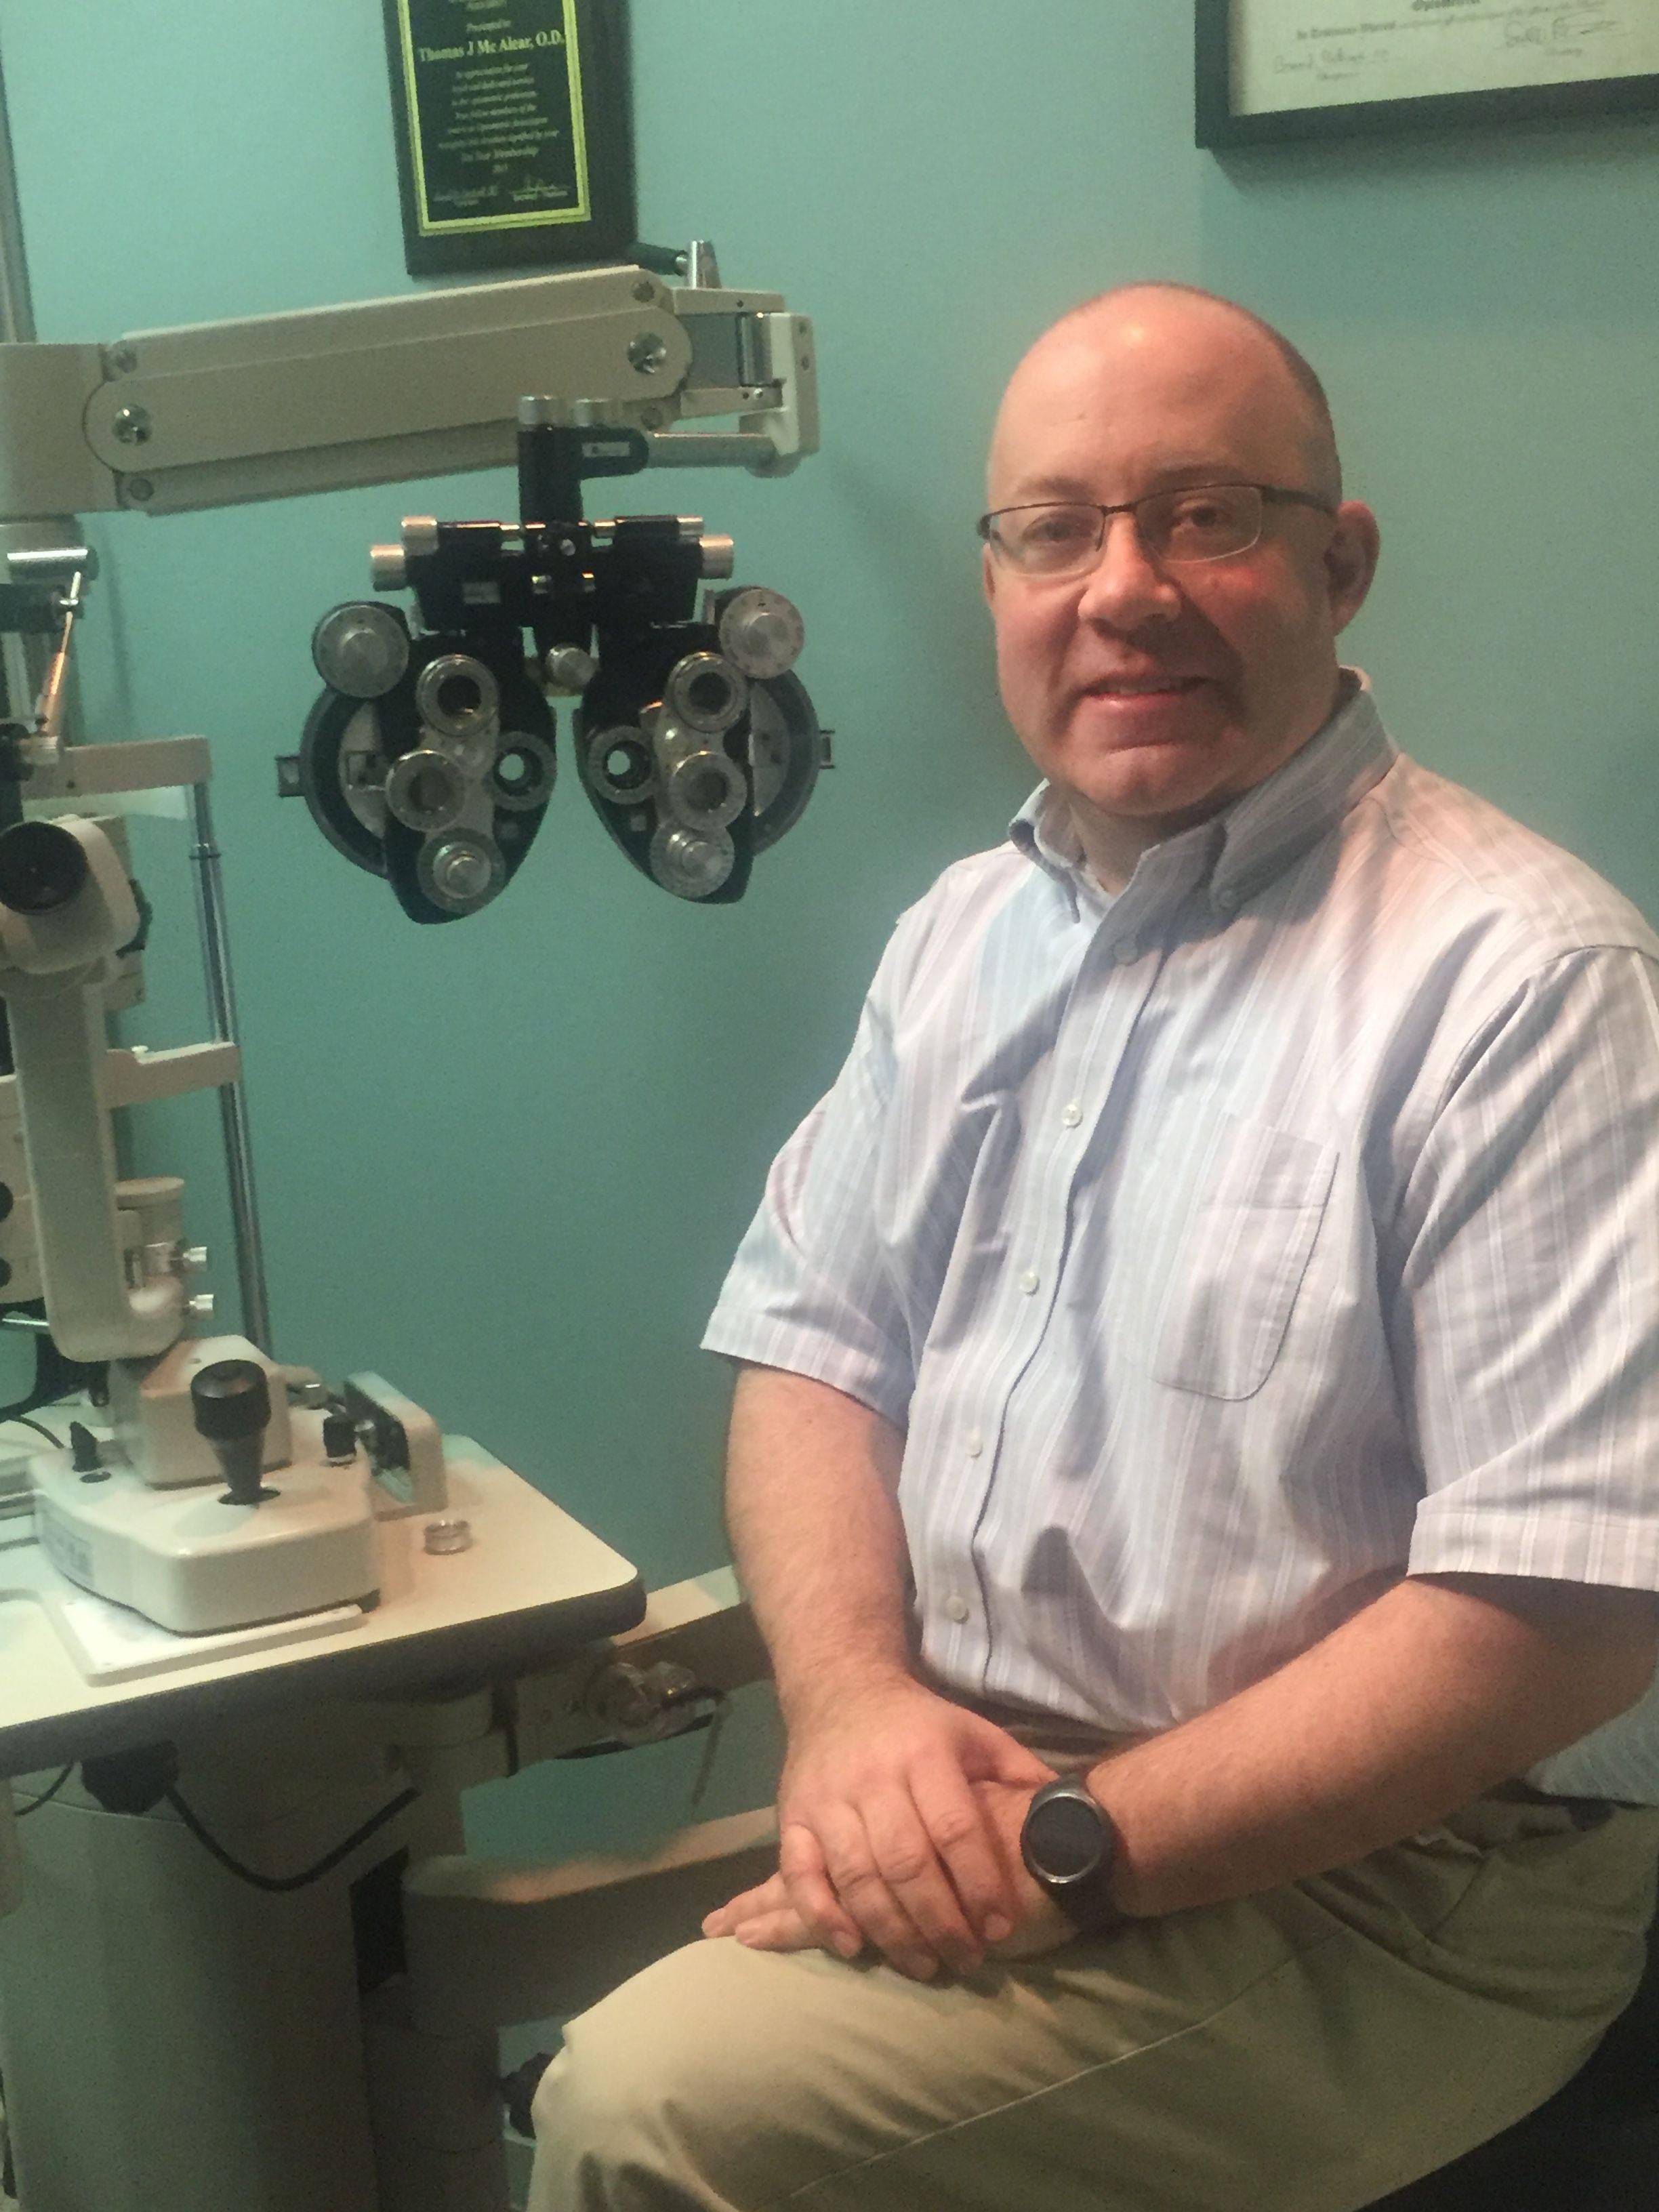 Weymouth's #1 Eye Doctor, Dr. McAlear